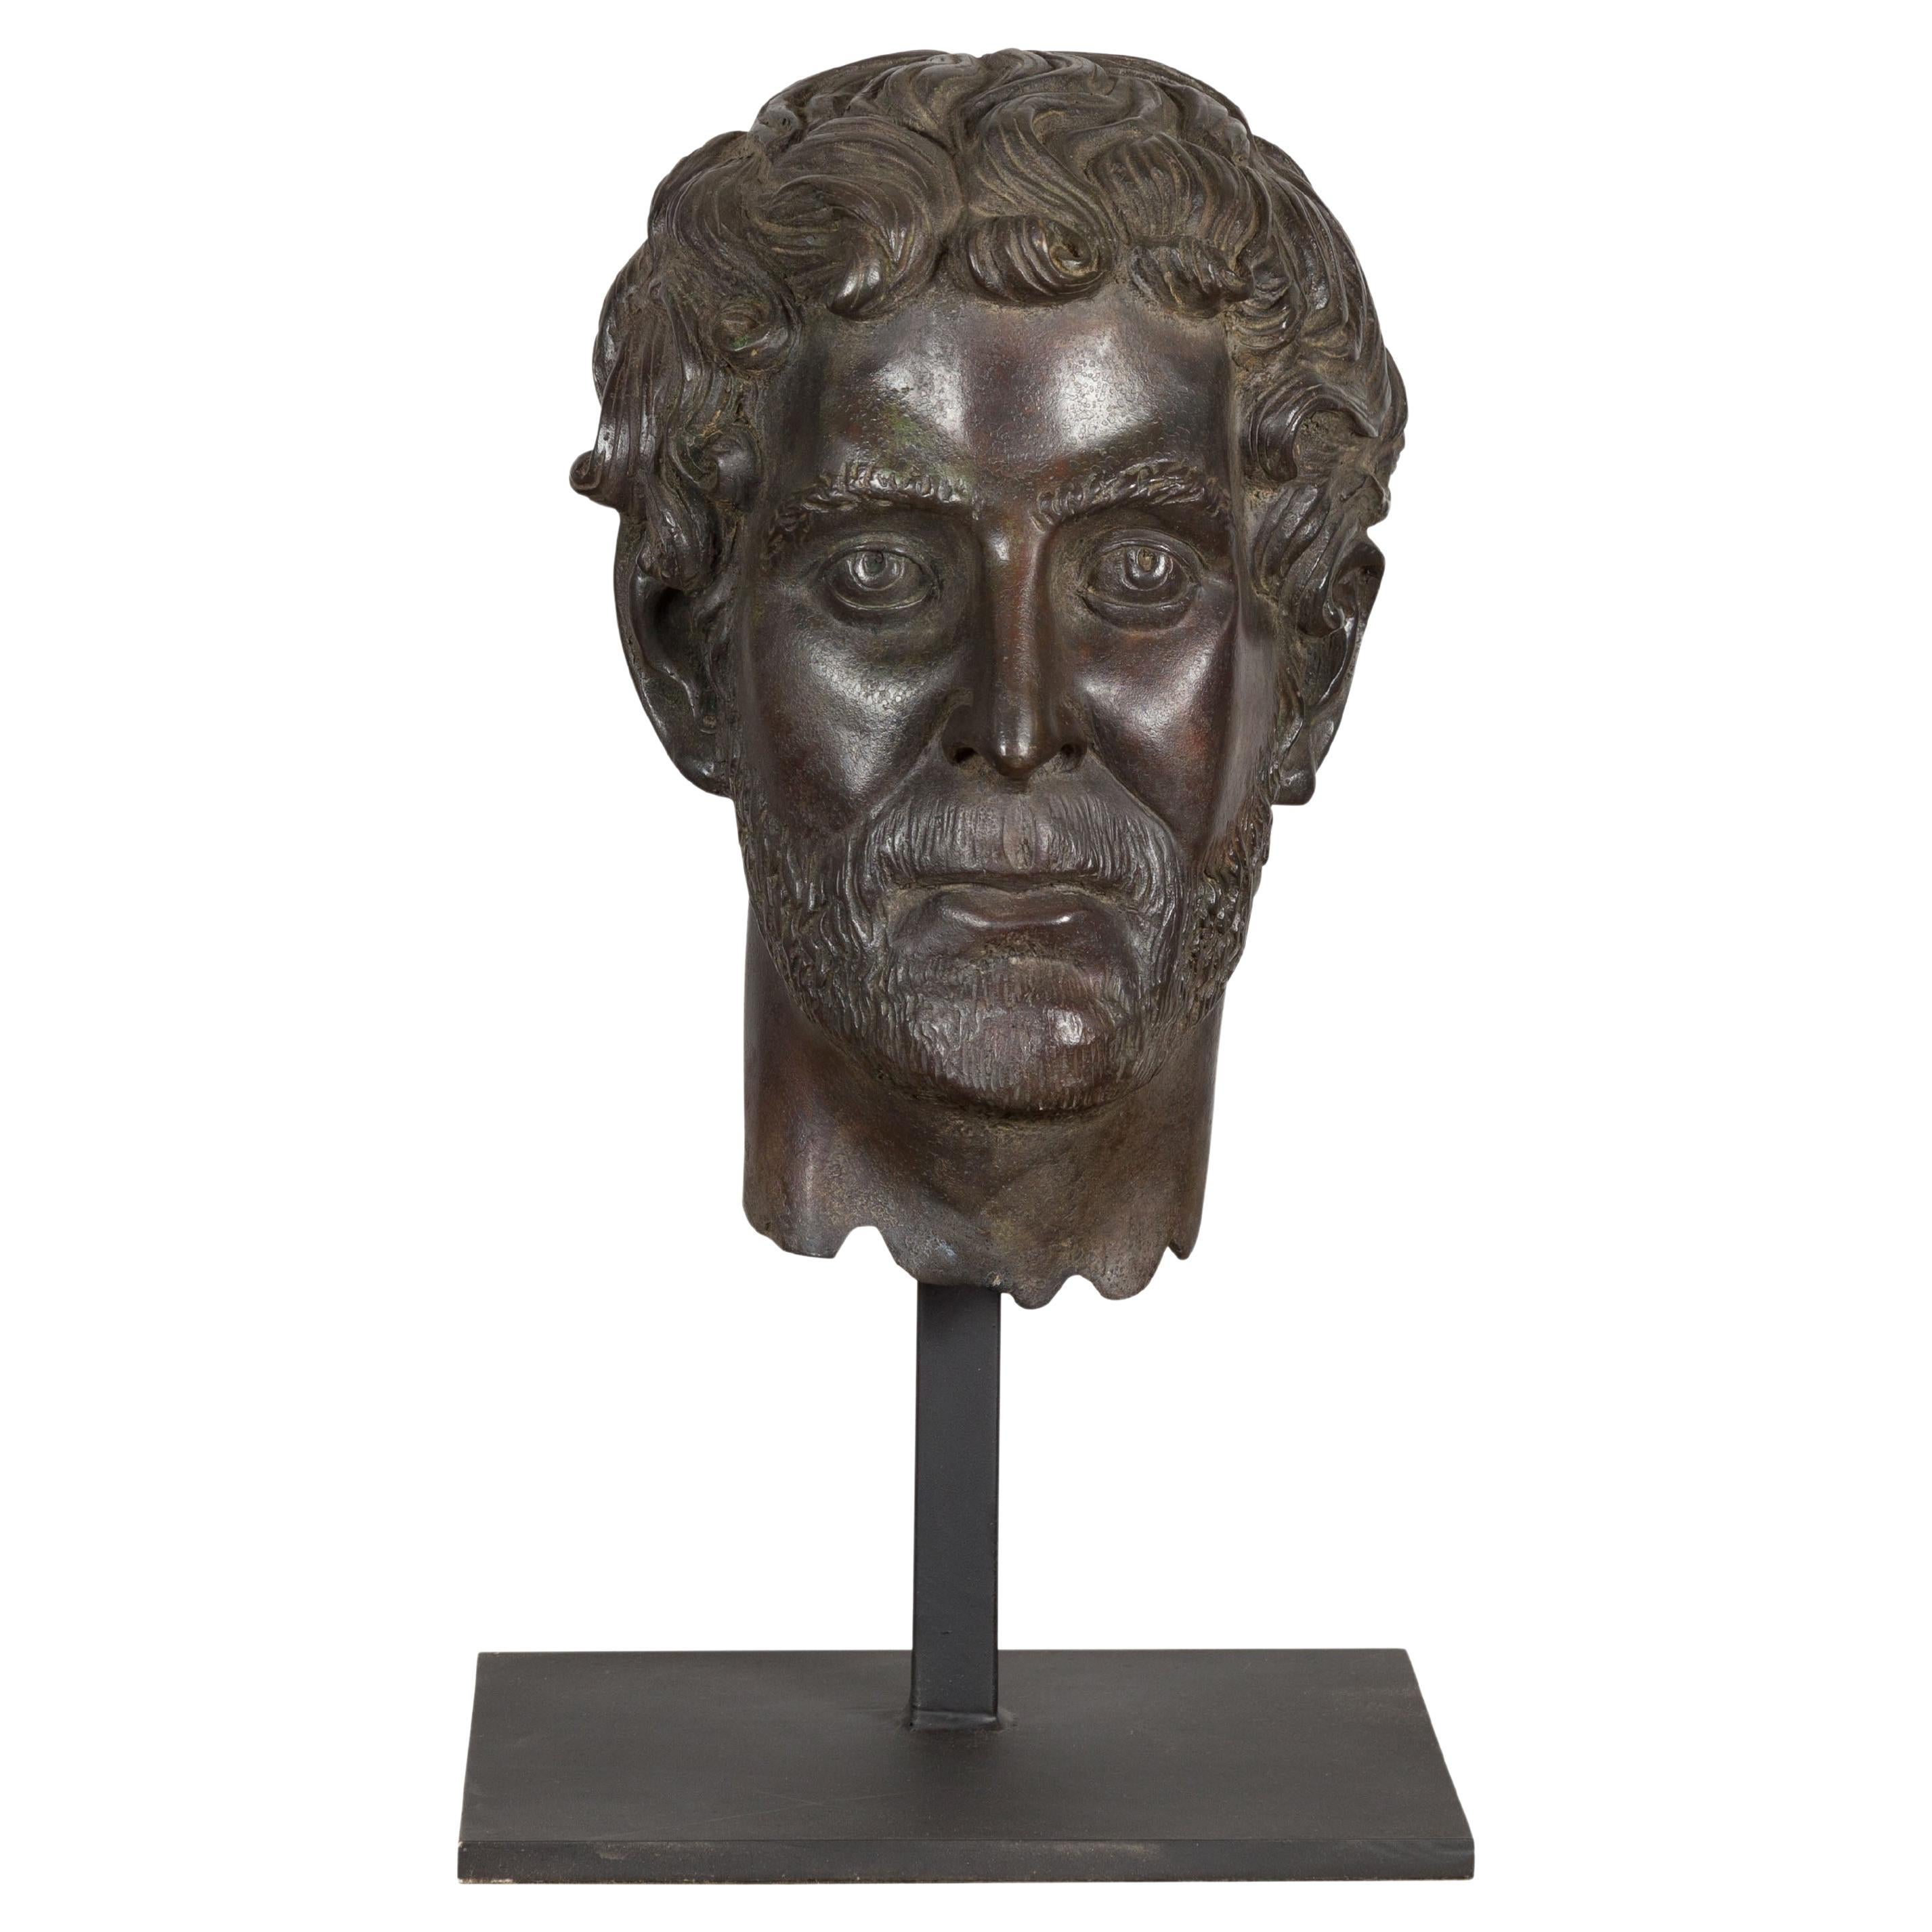 Greco Roman Bronze Tabletop Head Sculpture